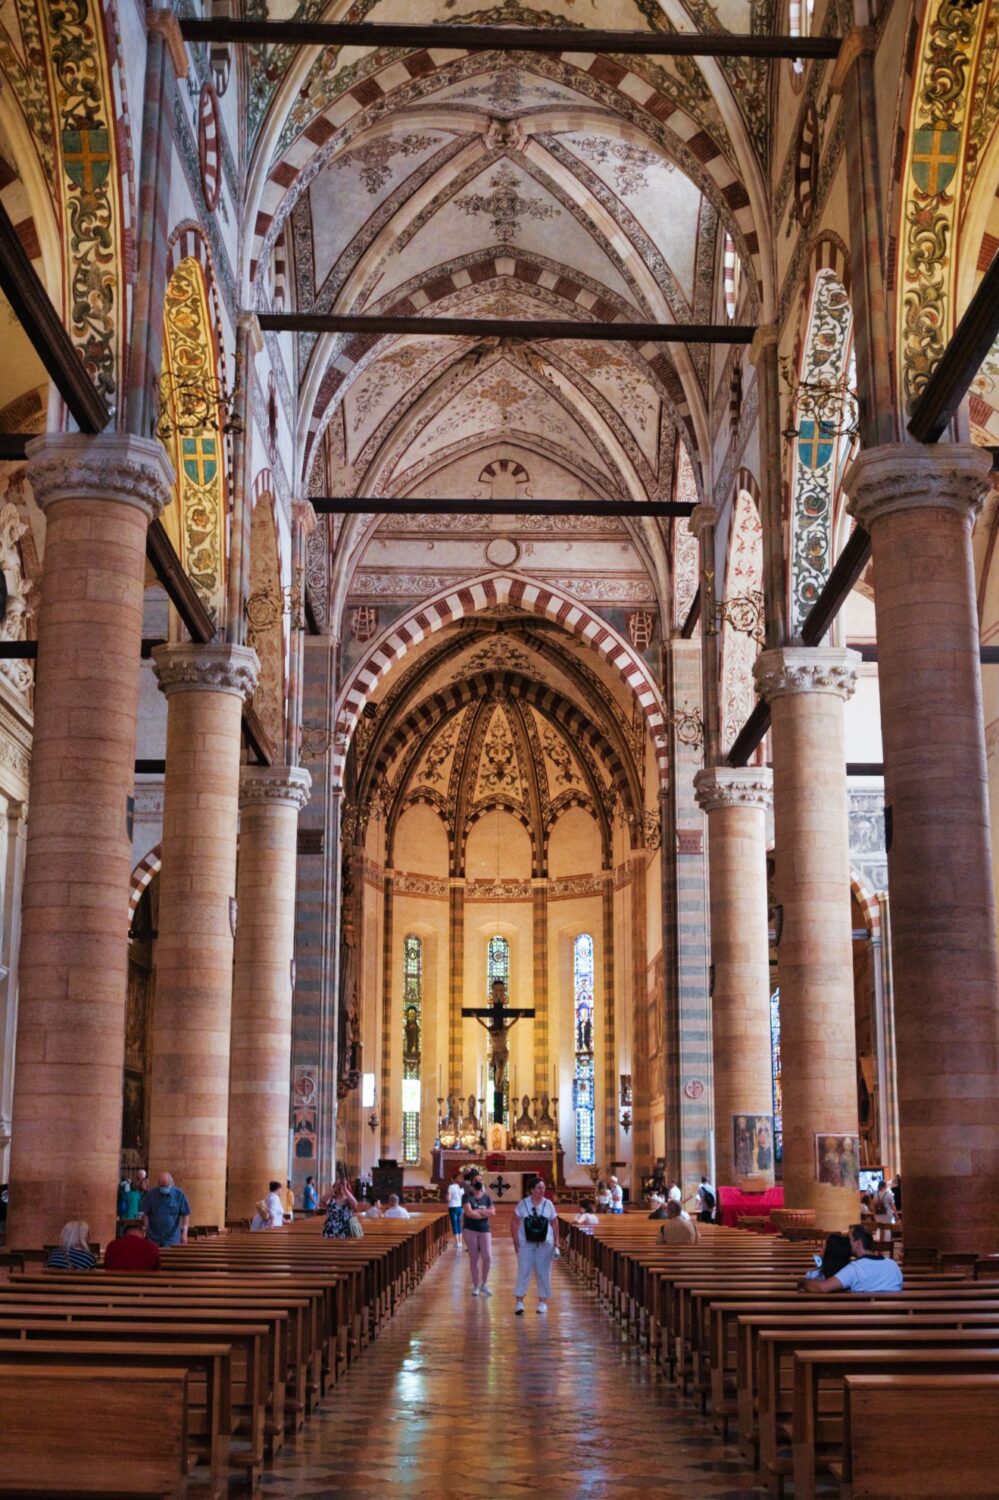  Basilica di Santa Anastasia - Verona 